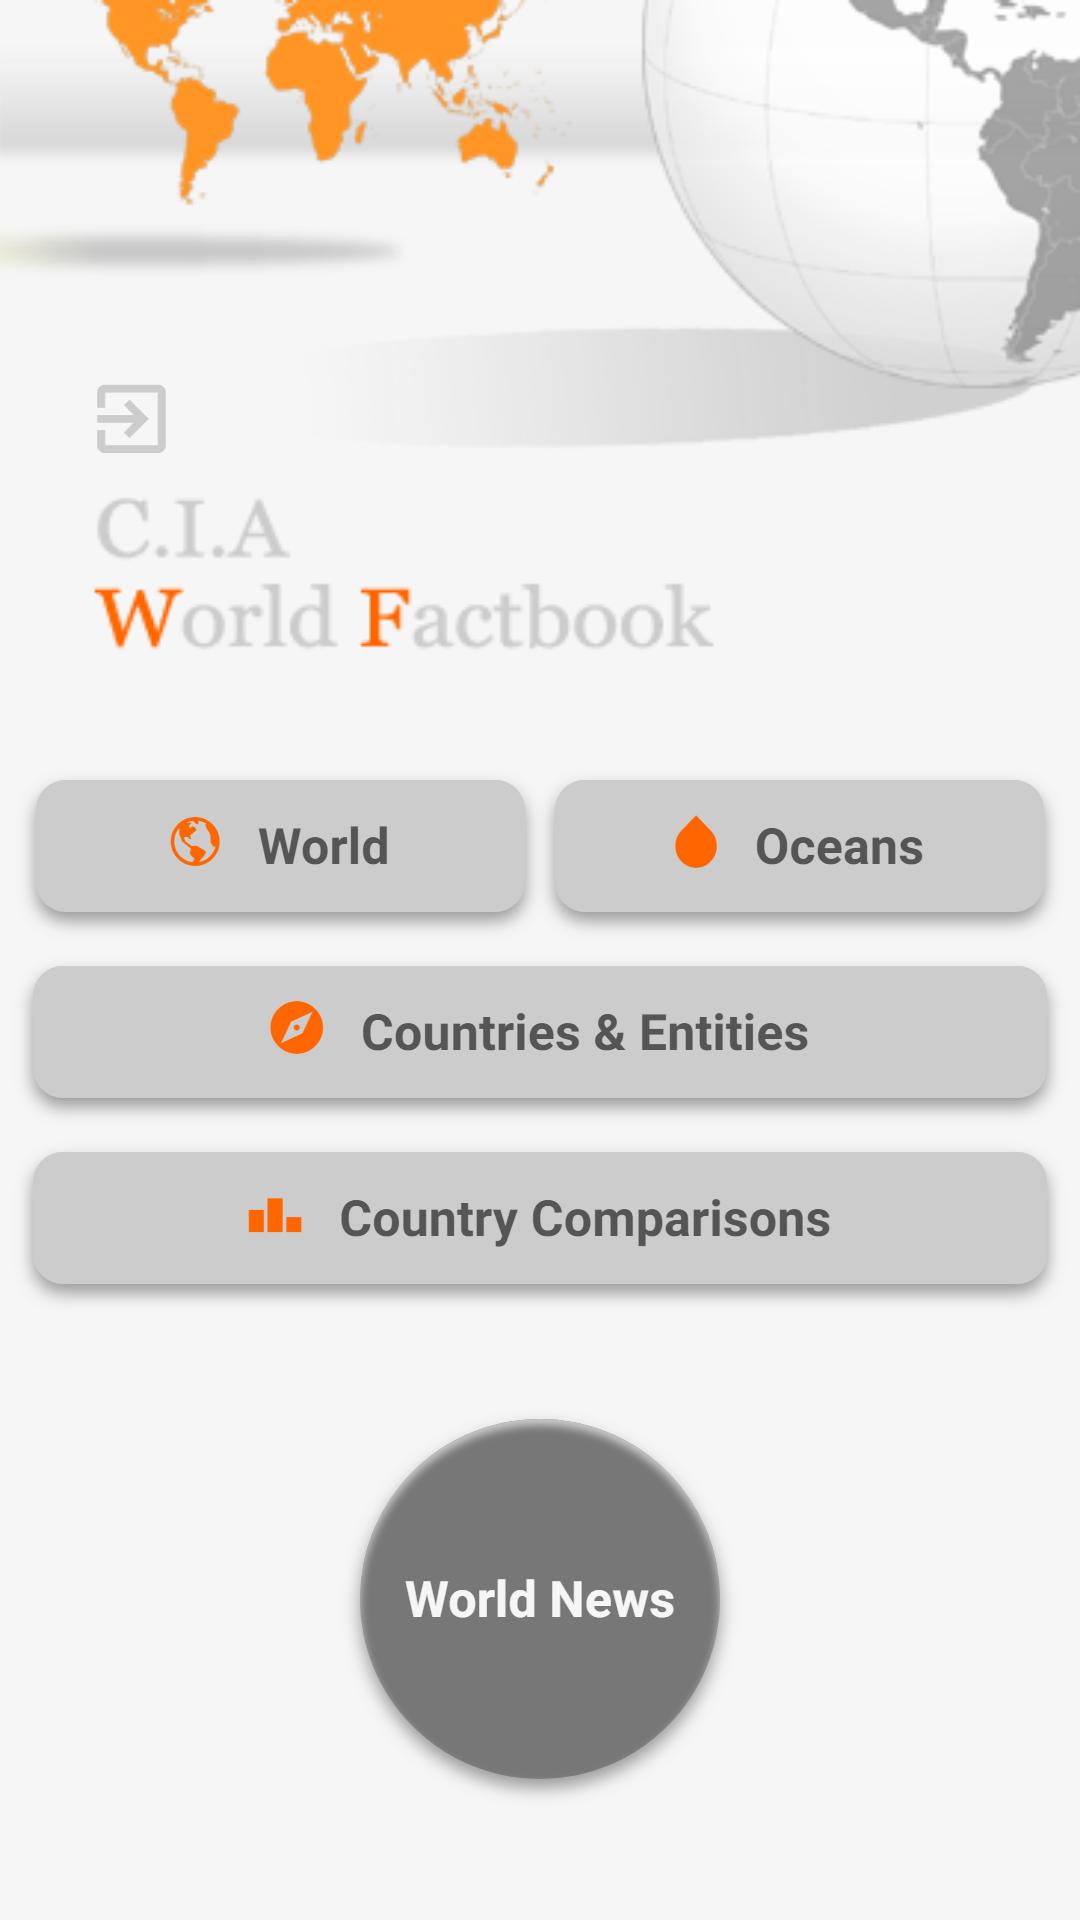 Cia world factbook